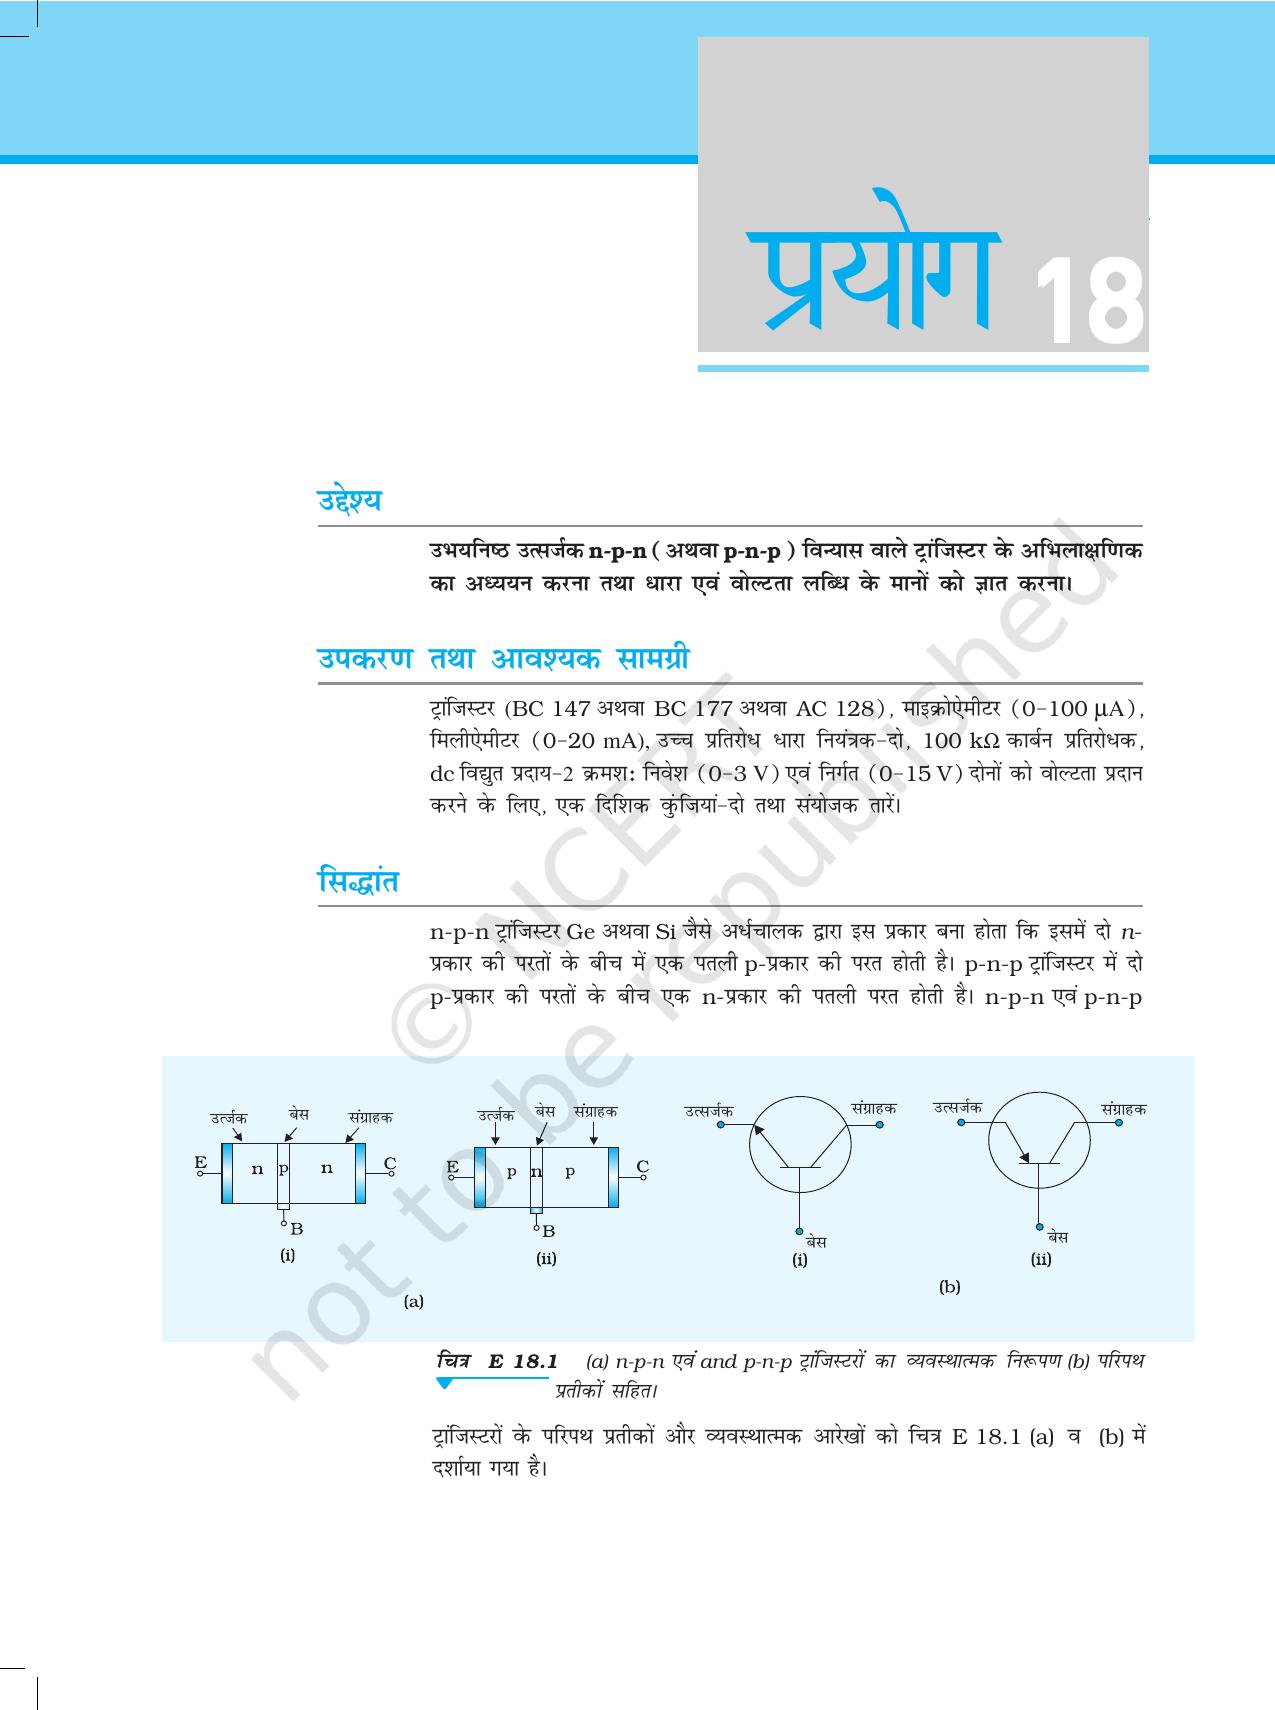 NCERT Laboratory Manuals for Class XII भौतिकी - प्रयोग (14 - 18) - Page 26